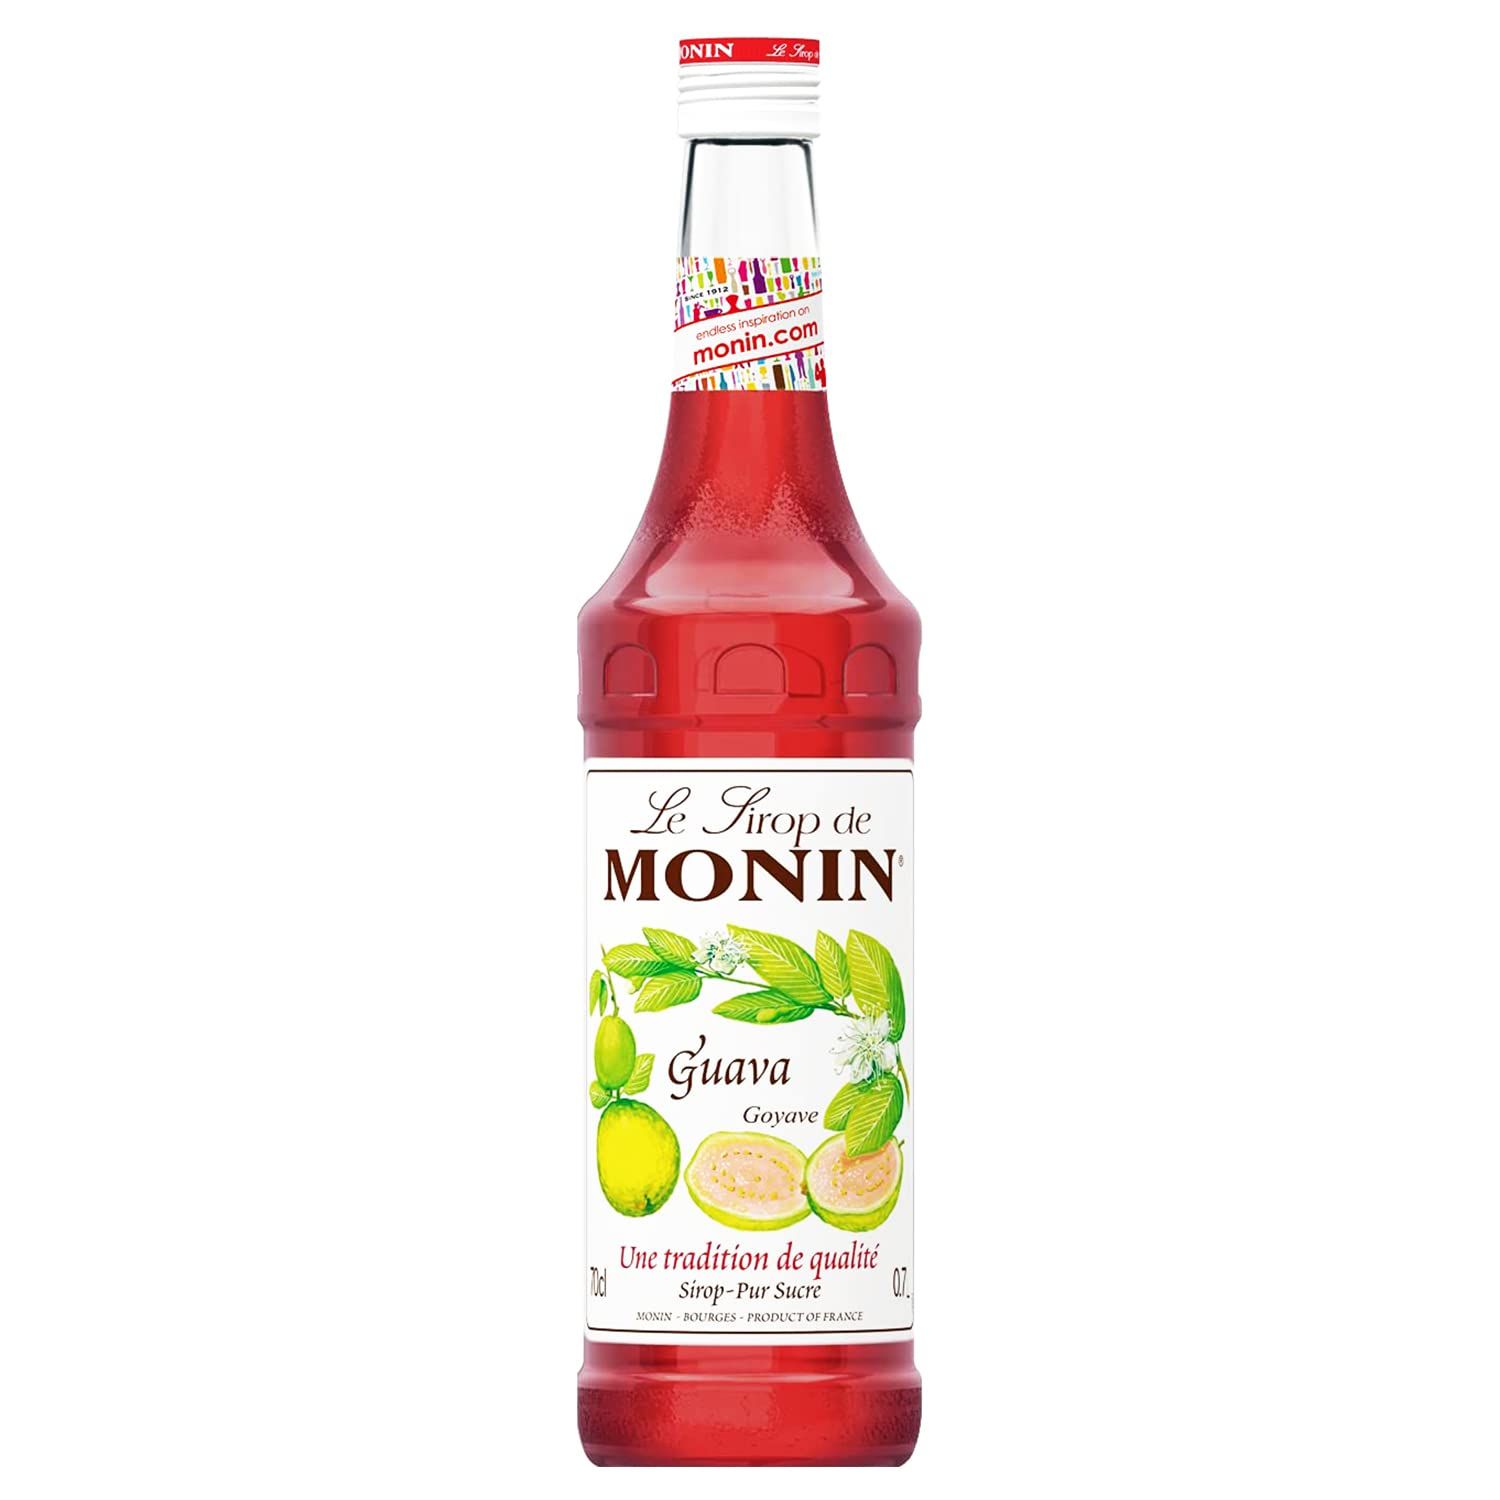 Monin Guava Bottle Image